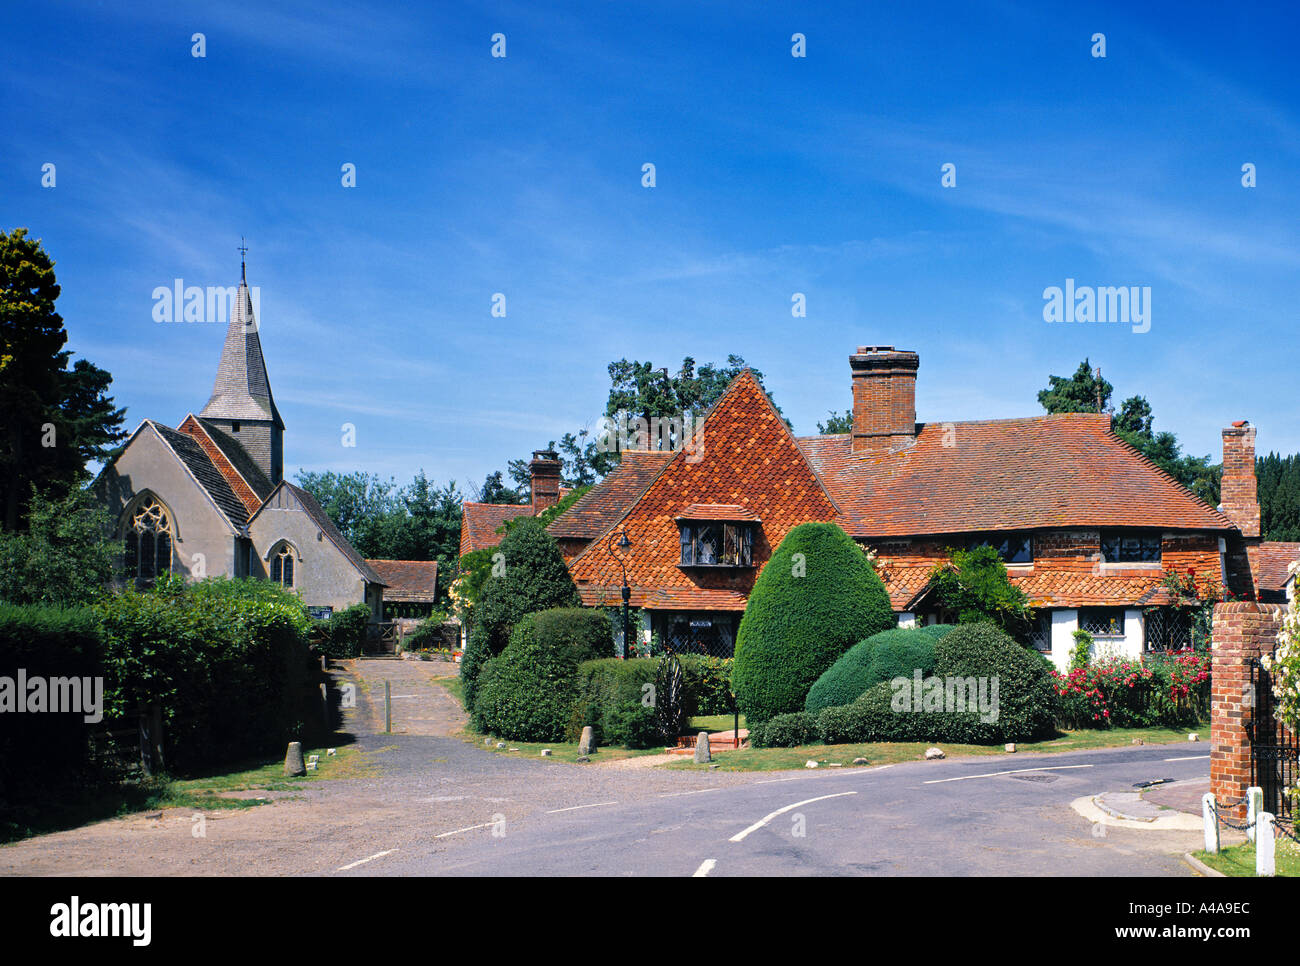 Alfold, Surrey, England Stock Photo